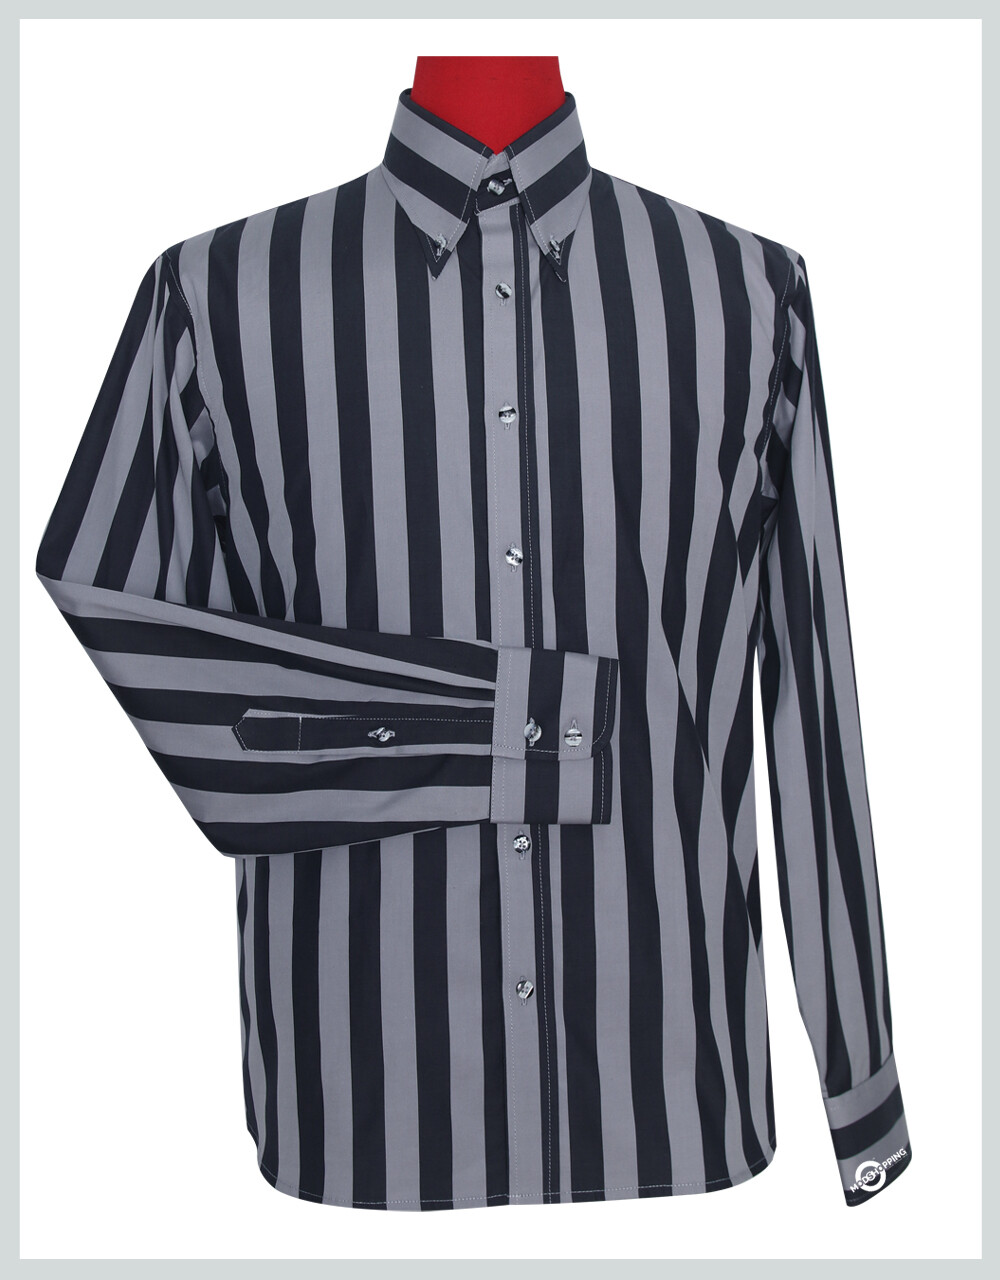 Button Down Collar Shirt | Grey & Black Striped Shirt For Man.